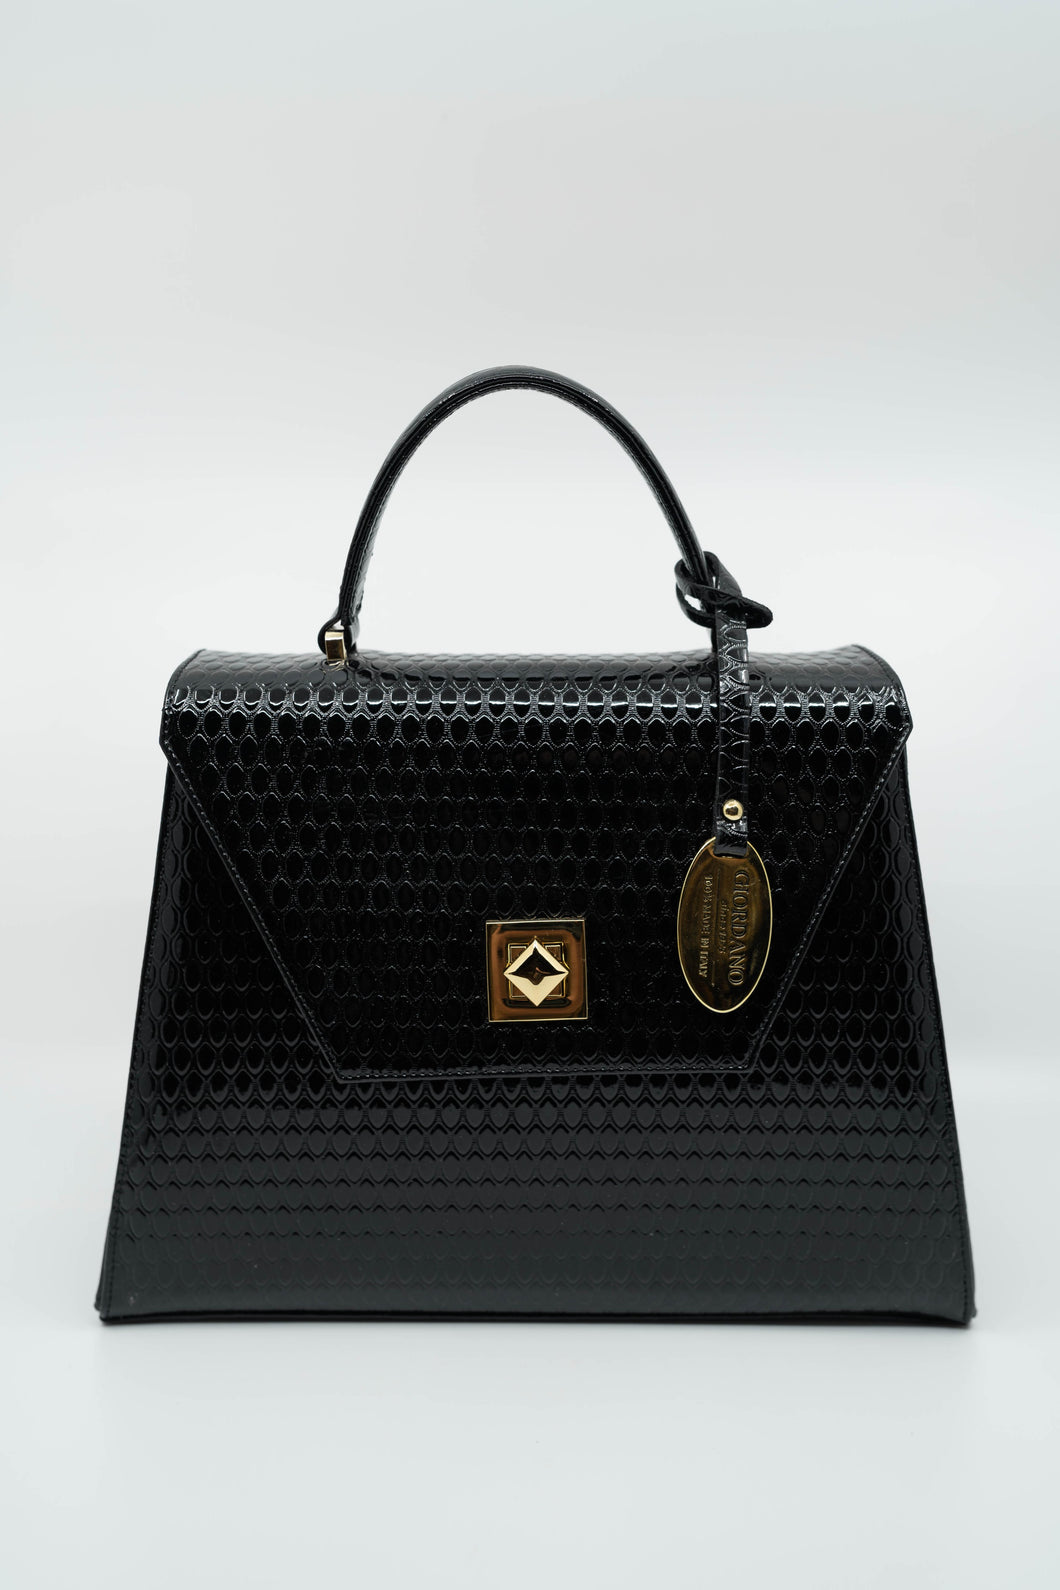 Giordano Handbag in Patent Leather